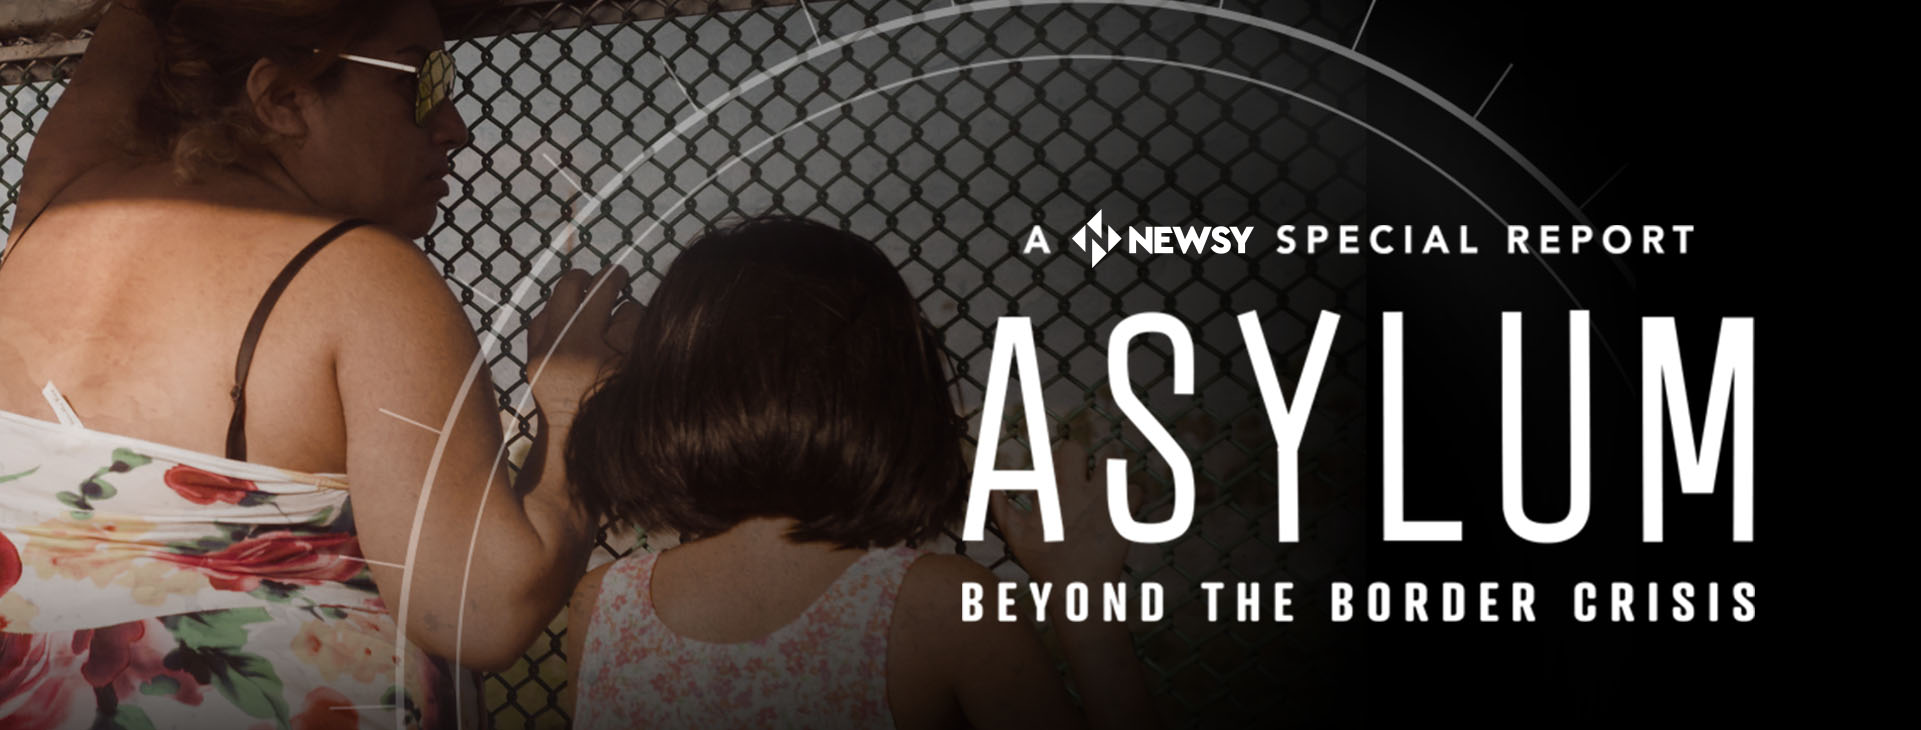 Asylum: Beyond the Border Crisis